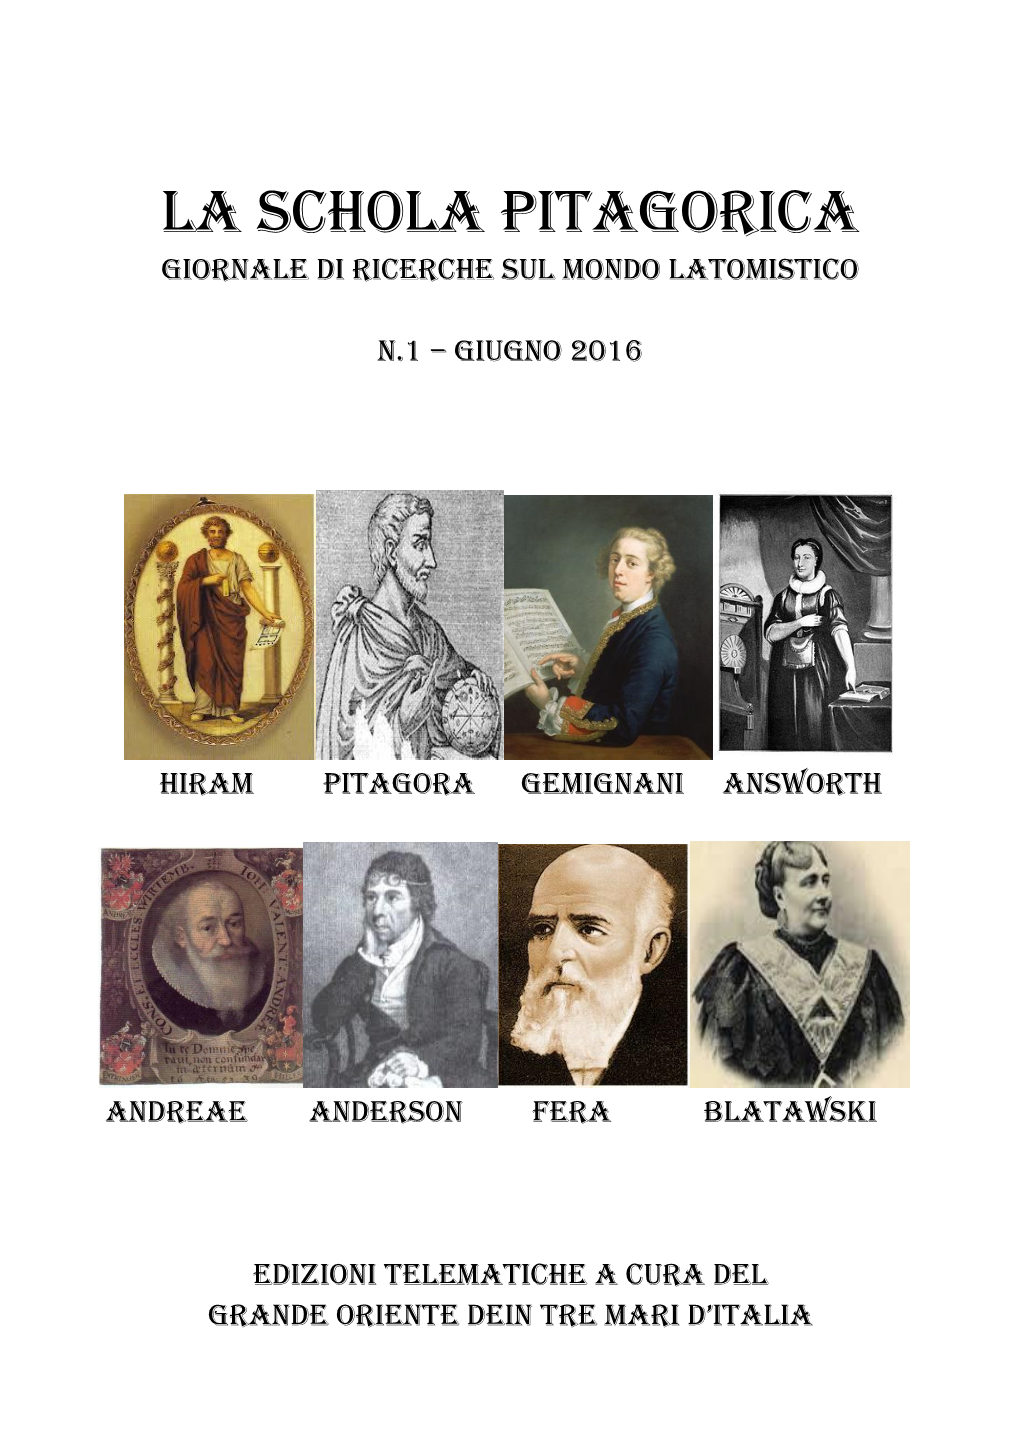 La Schola Pithagorica